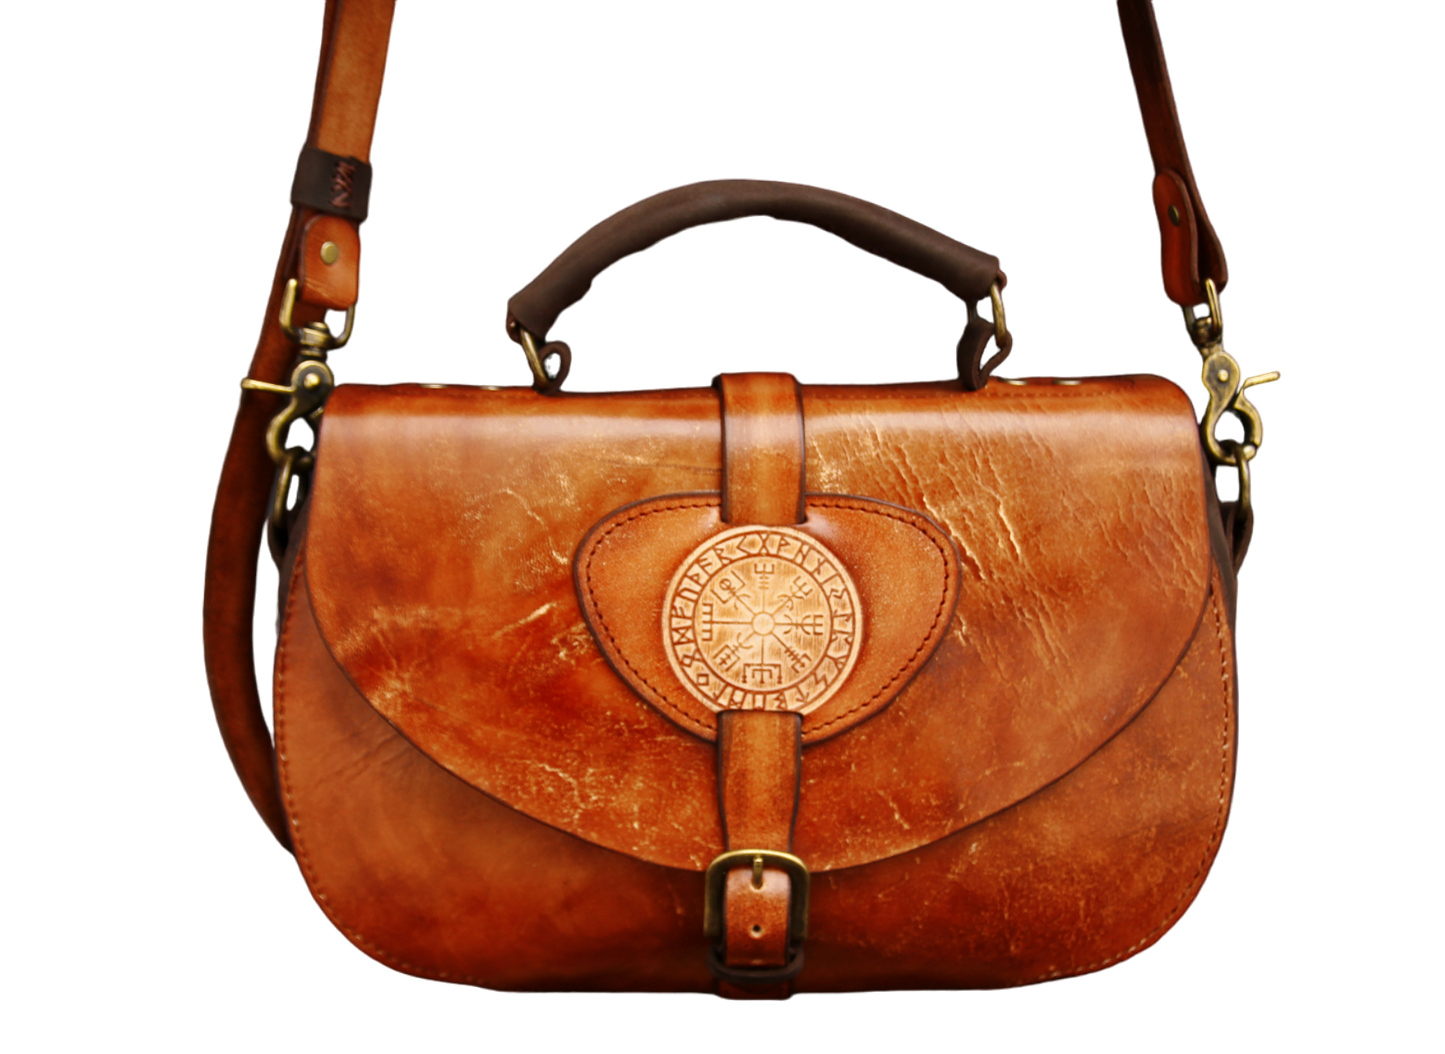 Handbag women leather/saddle bag leather/leather shoulder bag women/personalized leather bag/crossbody bag women leather